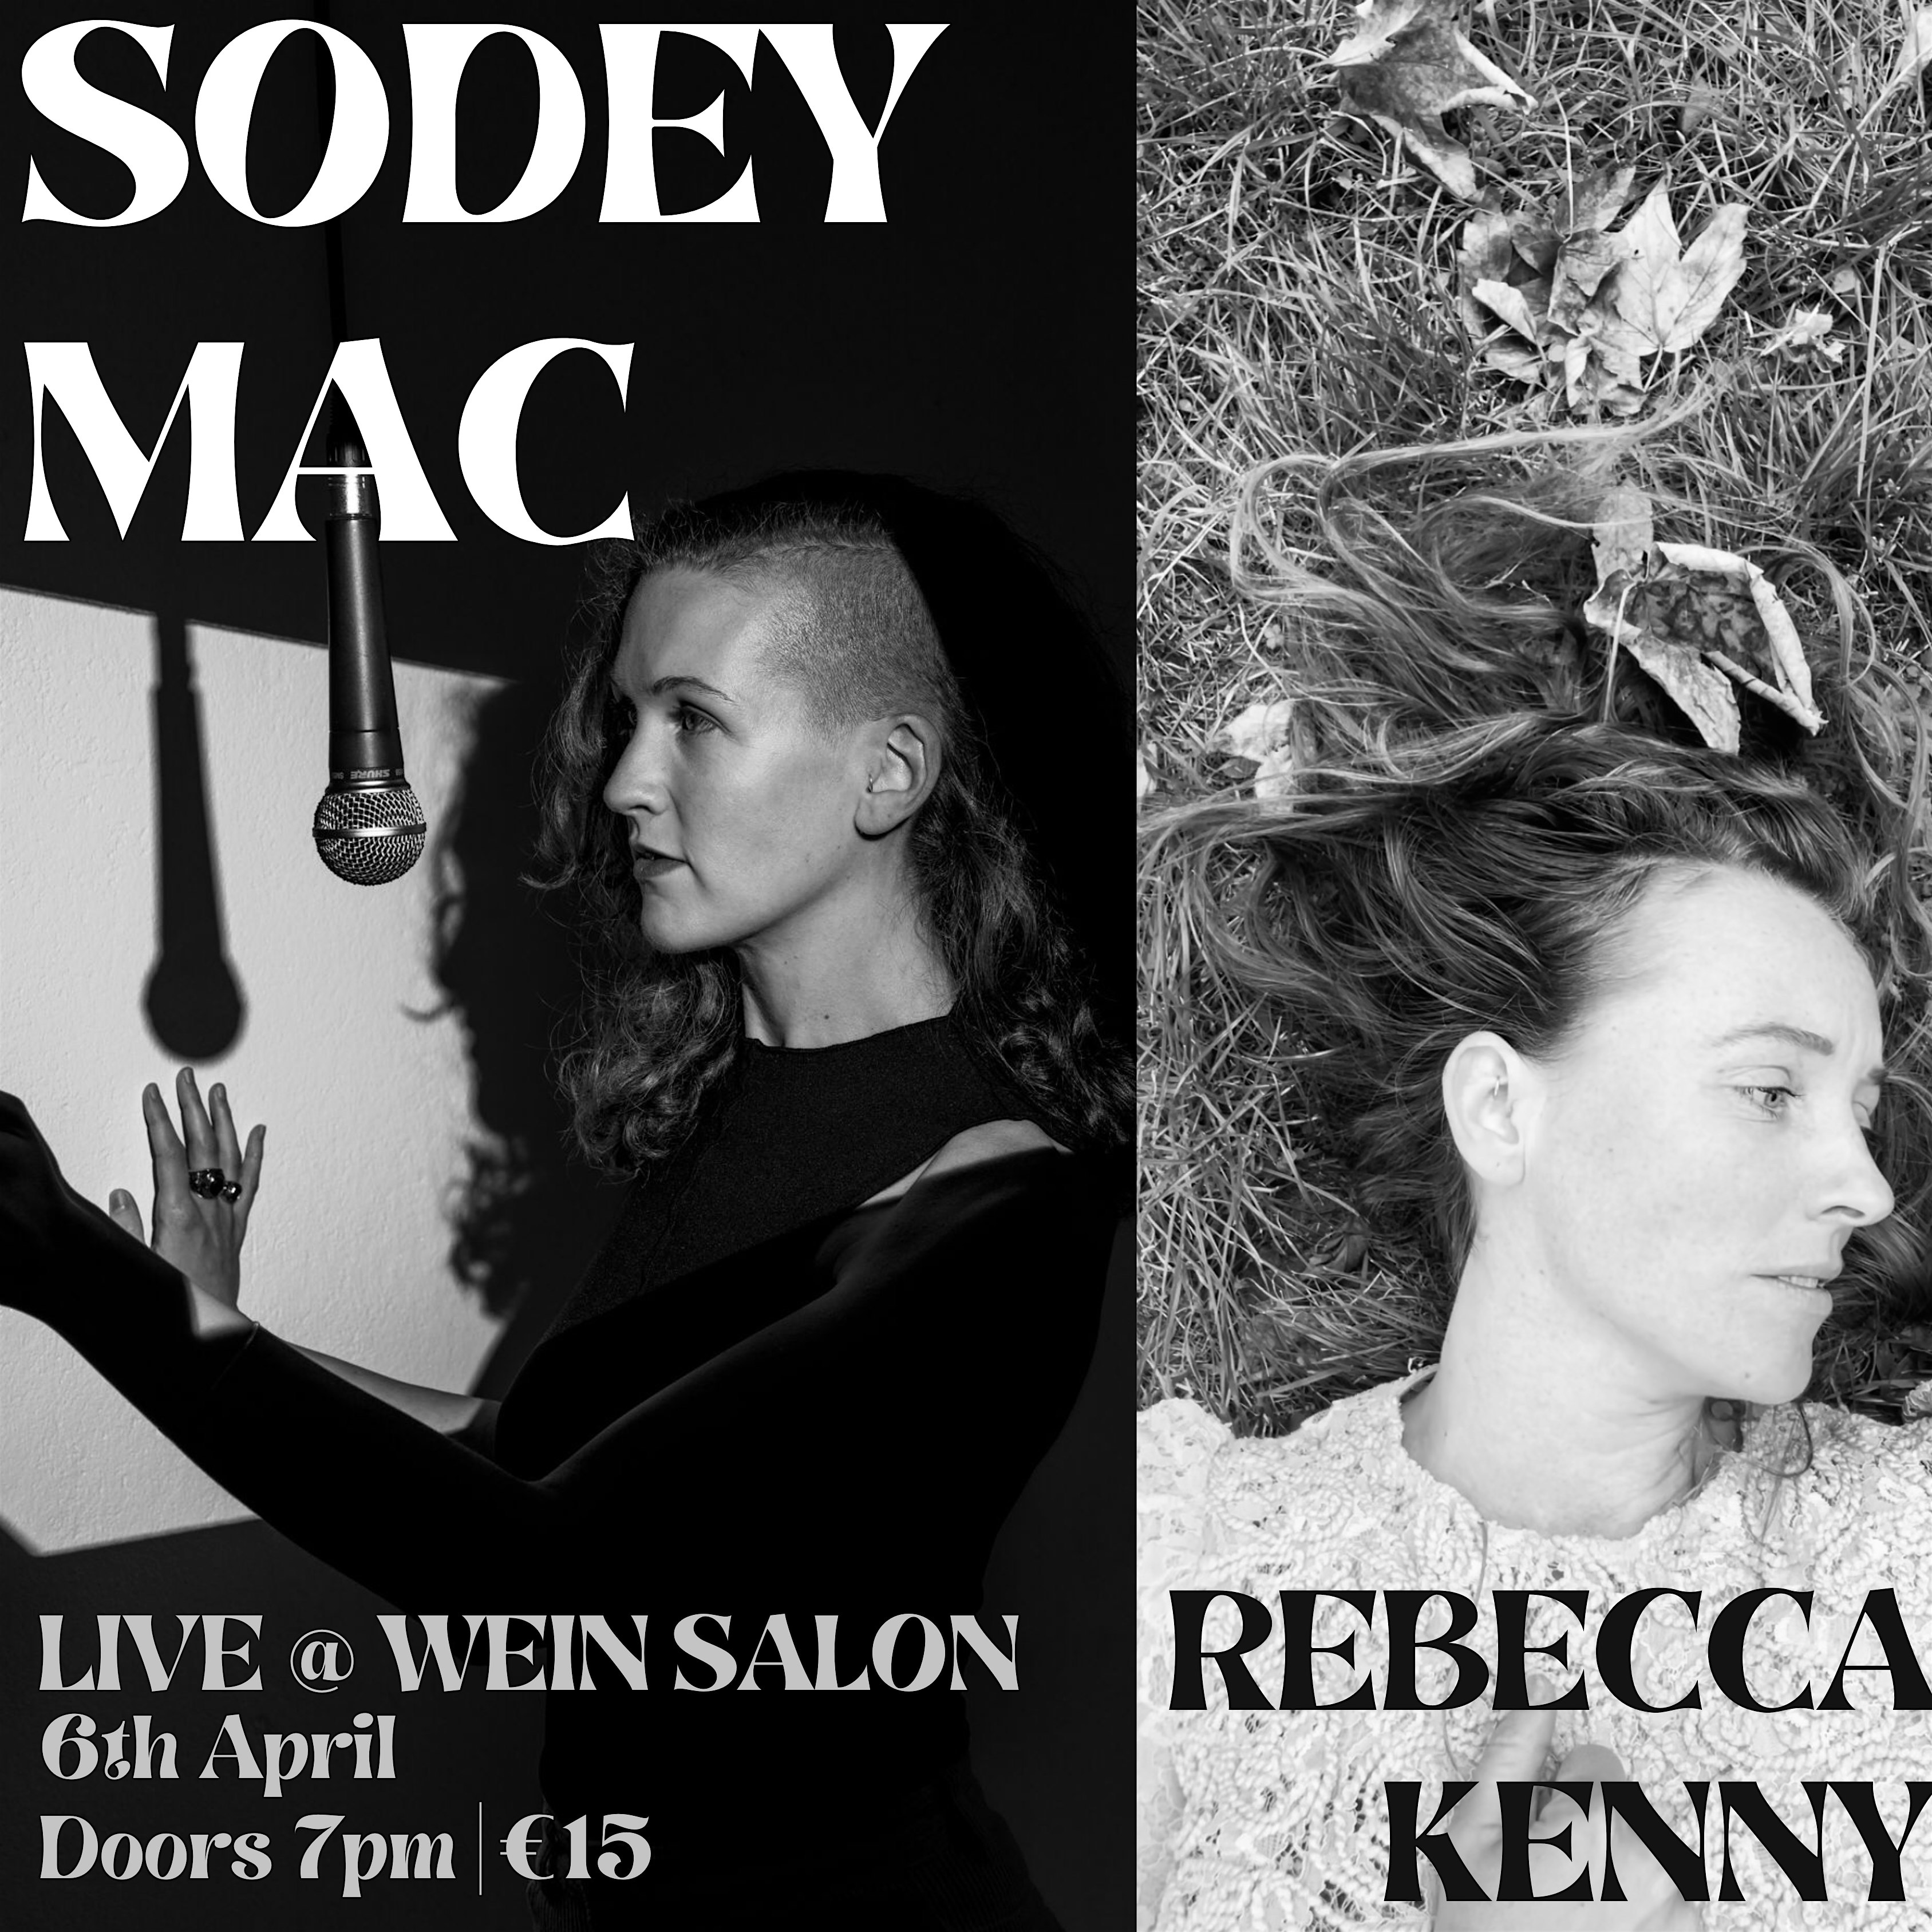 Sodey Mac & Rebecca Kenny - Live at Wein Salon